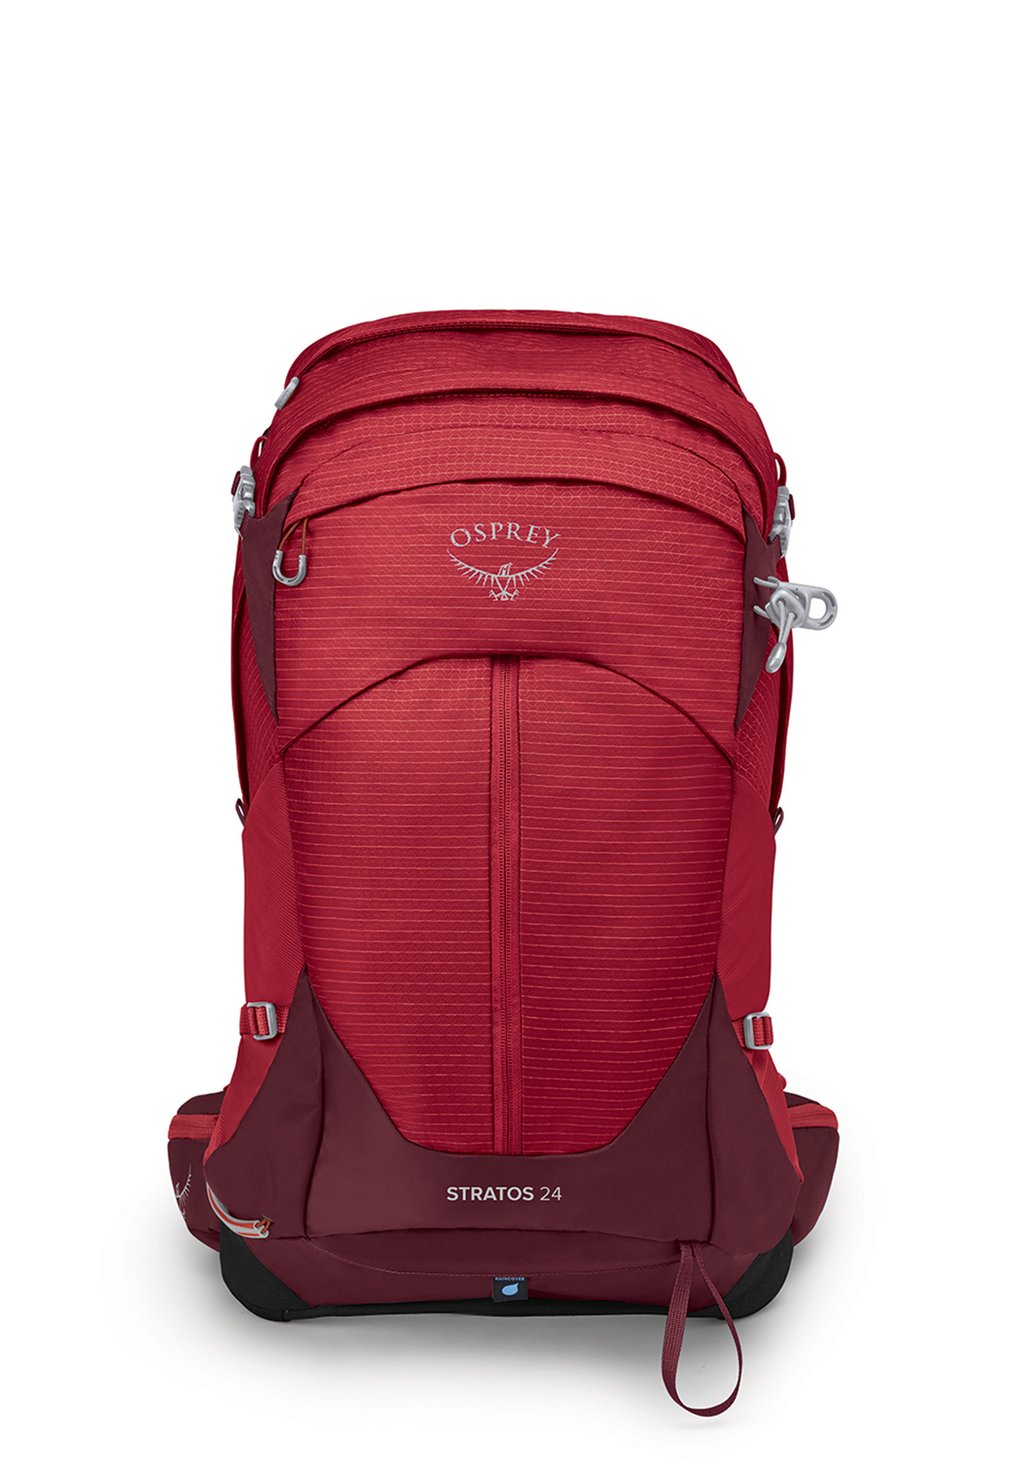 Треккинговый рюкзак STRATOS Osprey, цвет poinsettia red